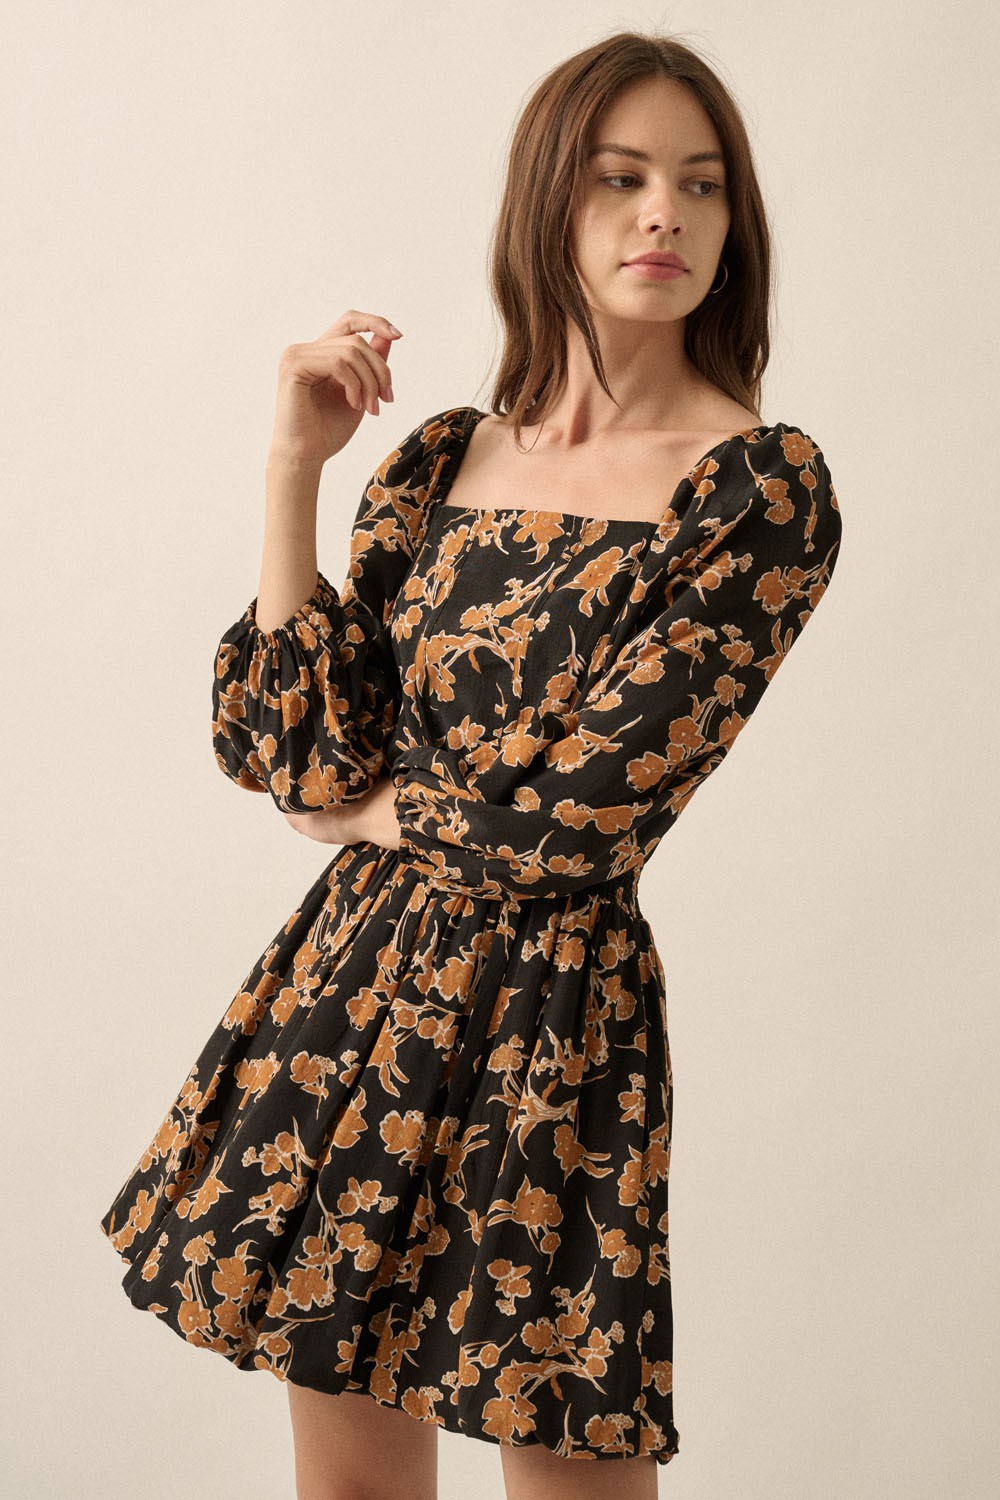 Black Floral Square Neck Corset Style Bodice Mini Dress